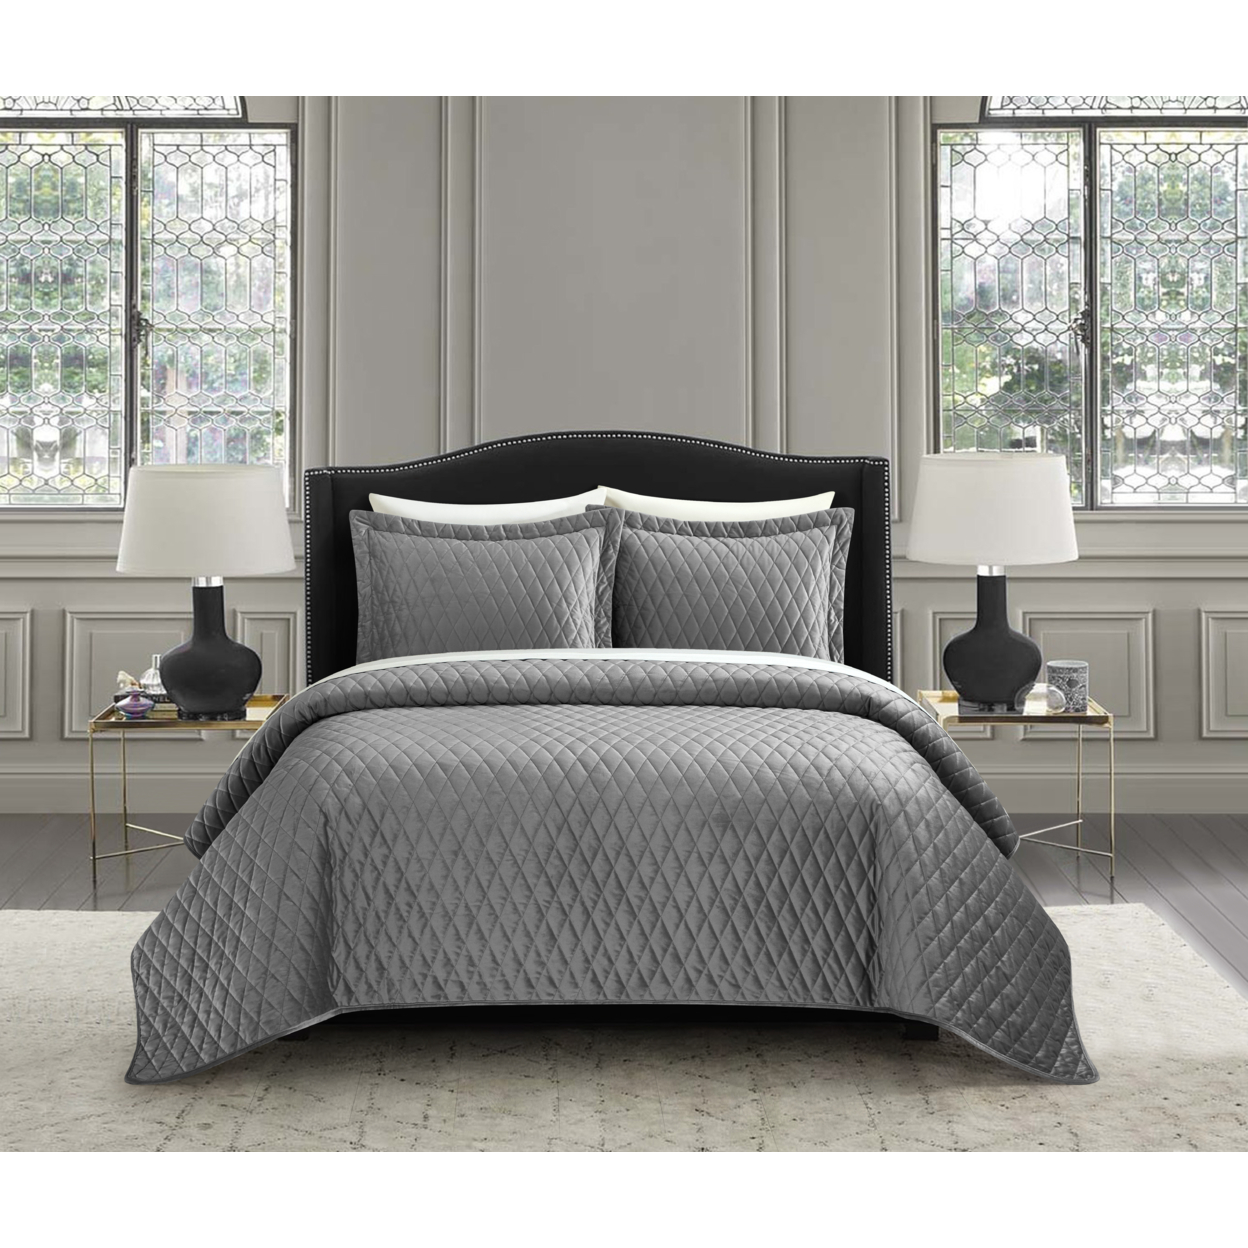 NY&C Home Dafa 3 Piece Velvet Quilt Set Diamond Stitched Pattern Bedding - Grey, King